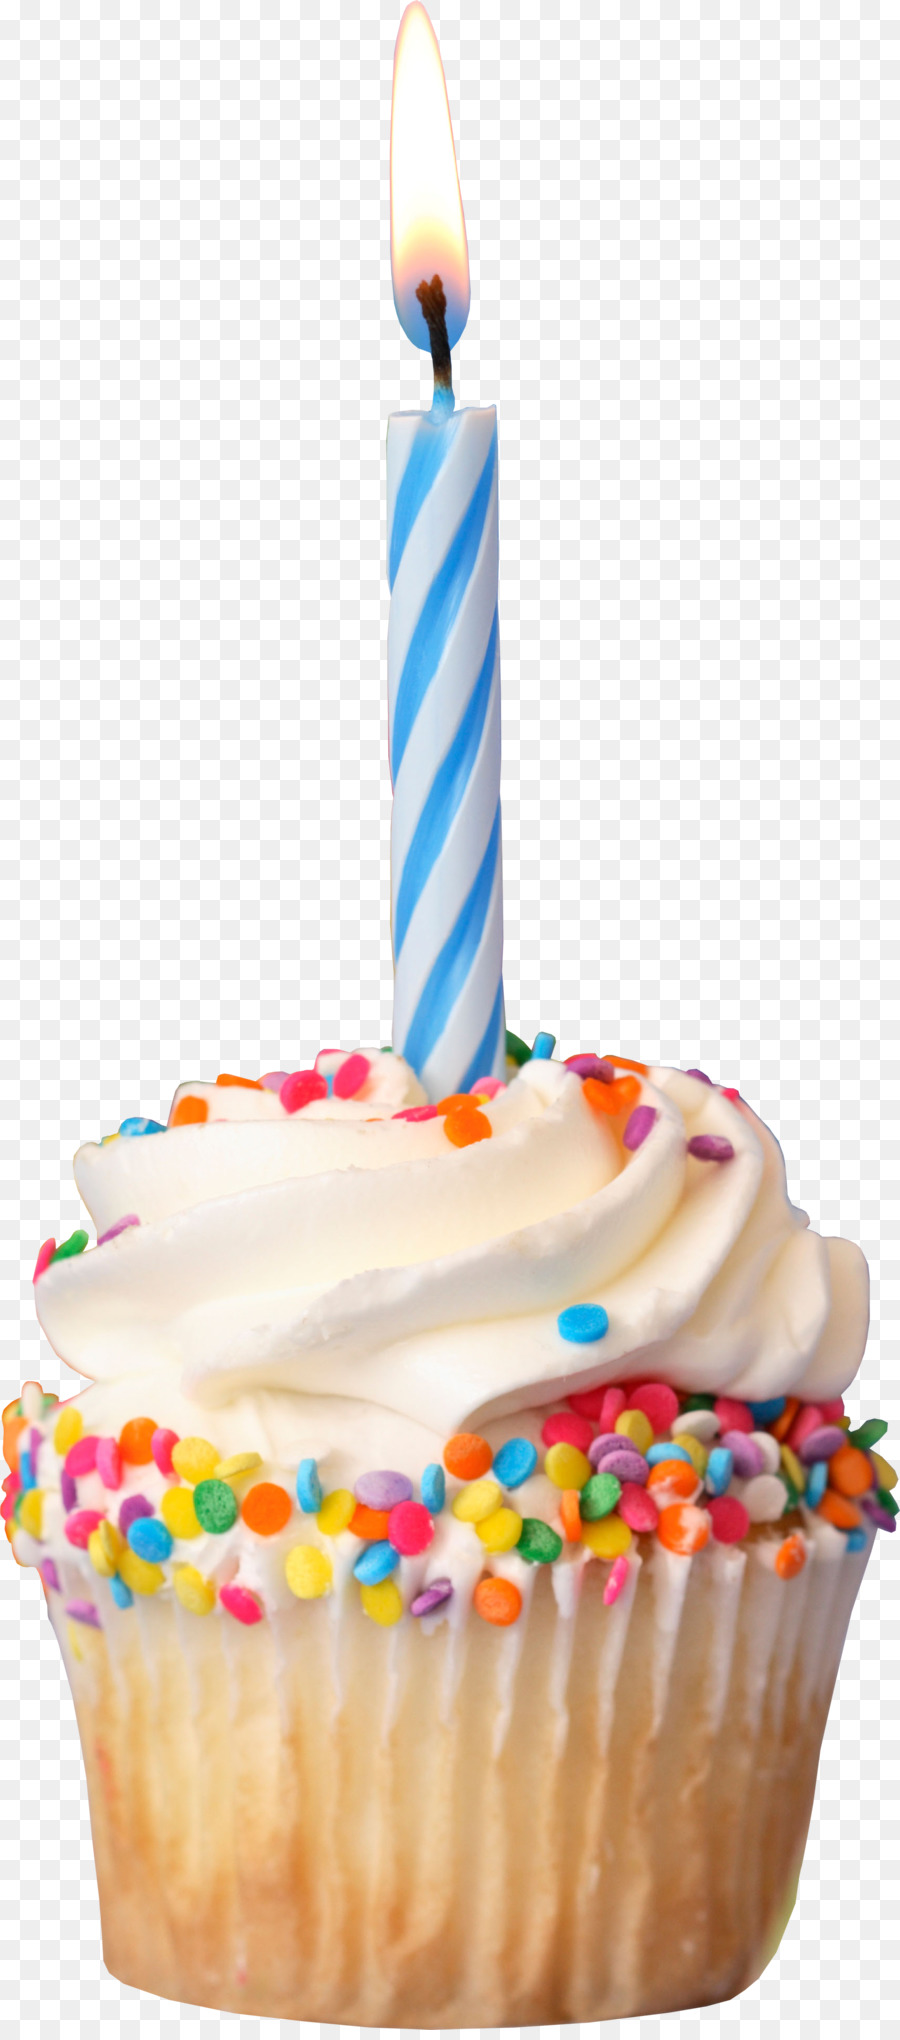 Torte Cupcake Birthday Clip art - Birthday png download - 1717*3873 - Free Transparent Torte png Download.